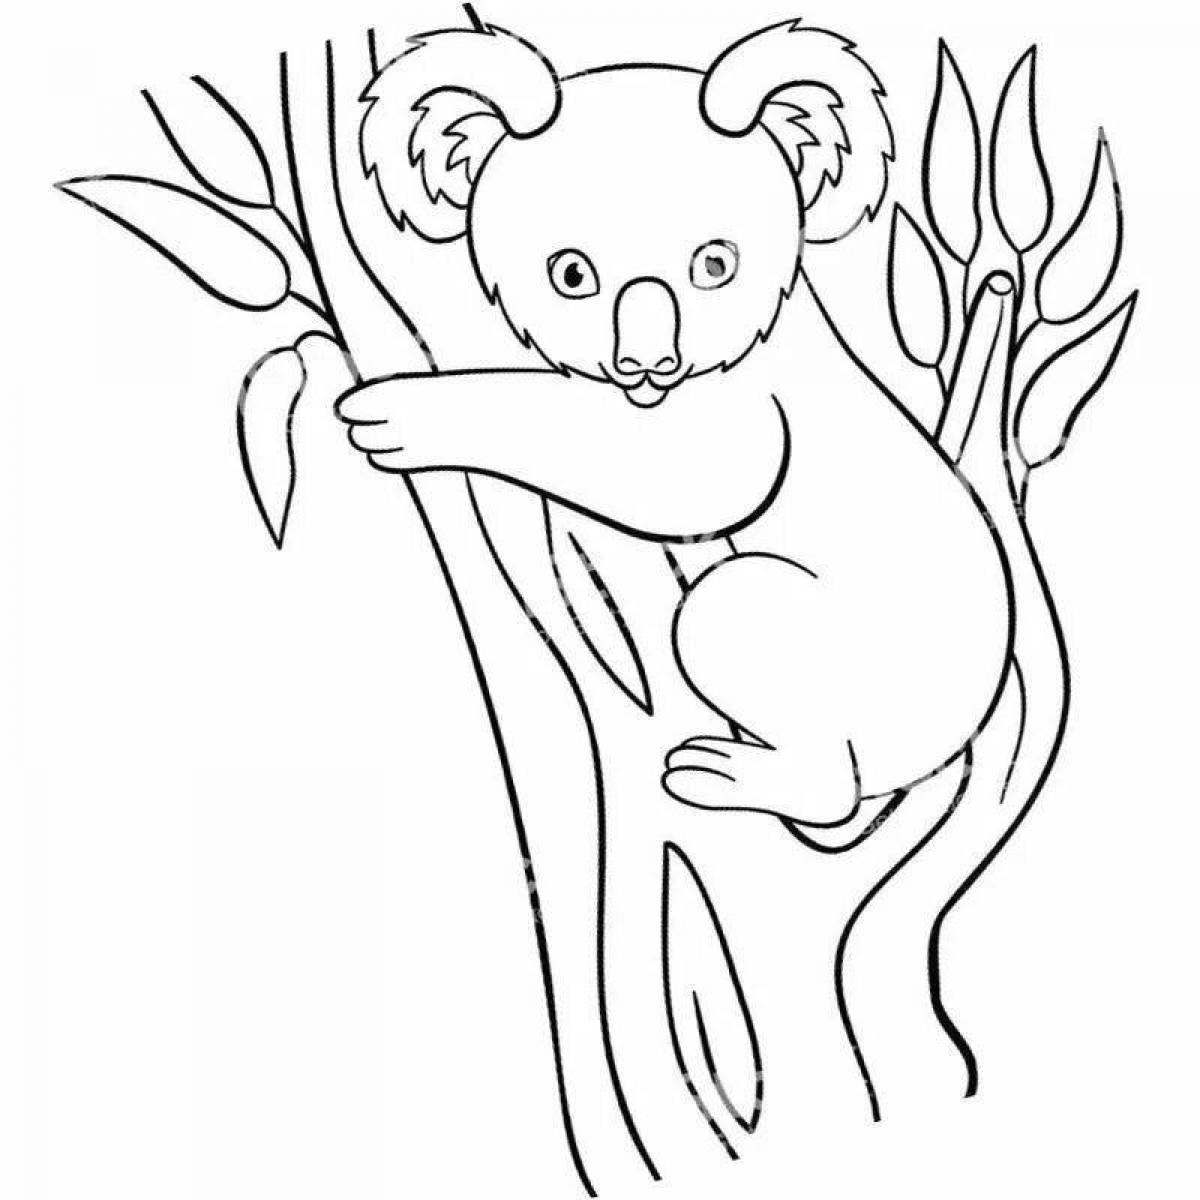 Sweet koala coloring for kids